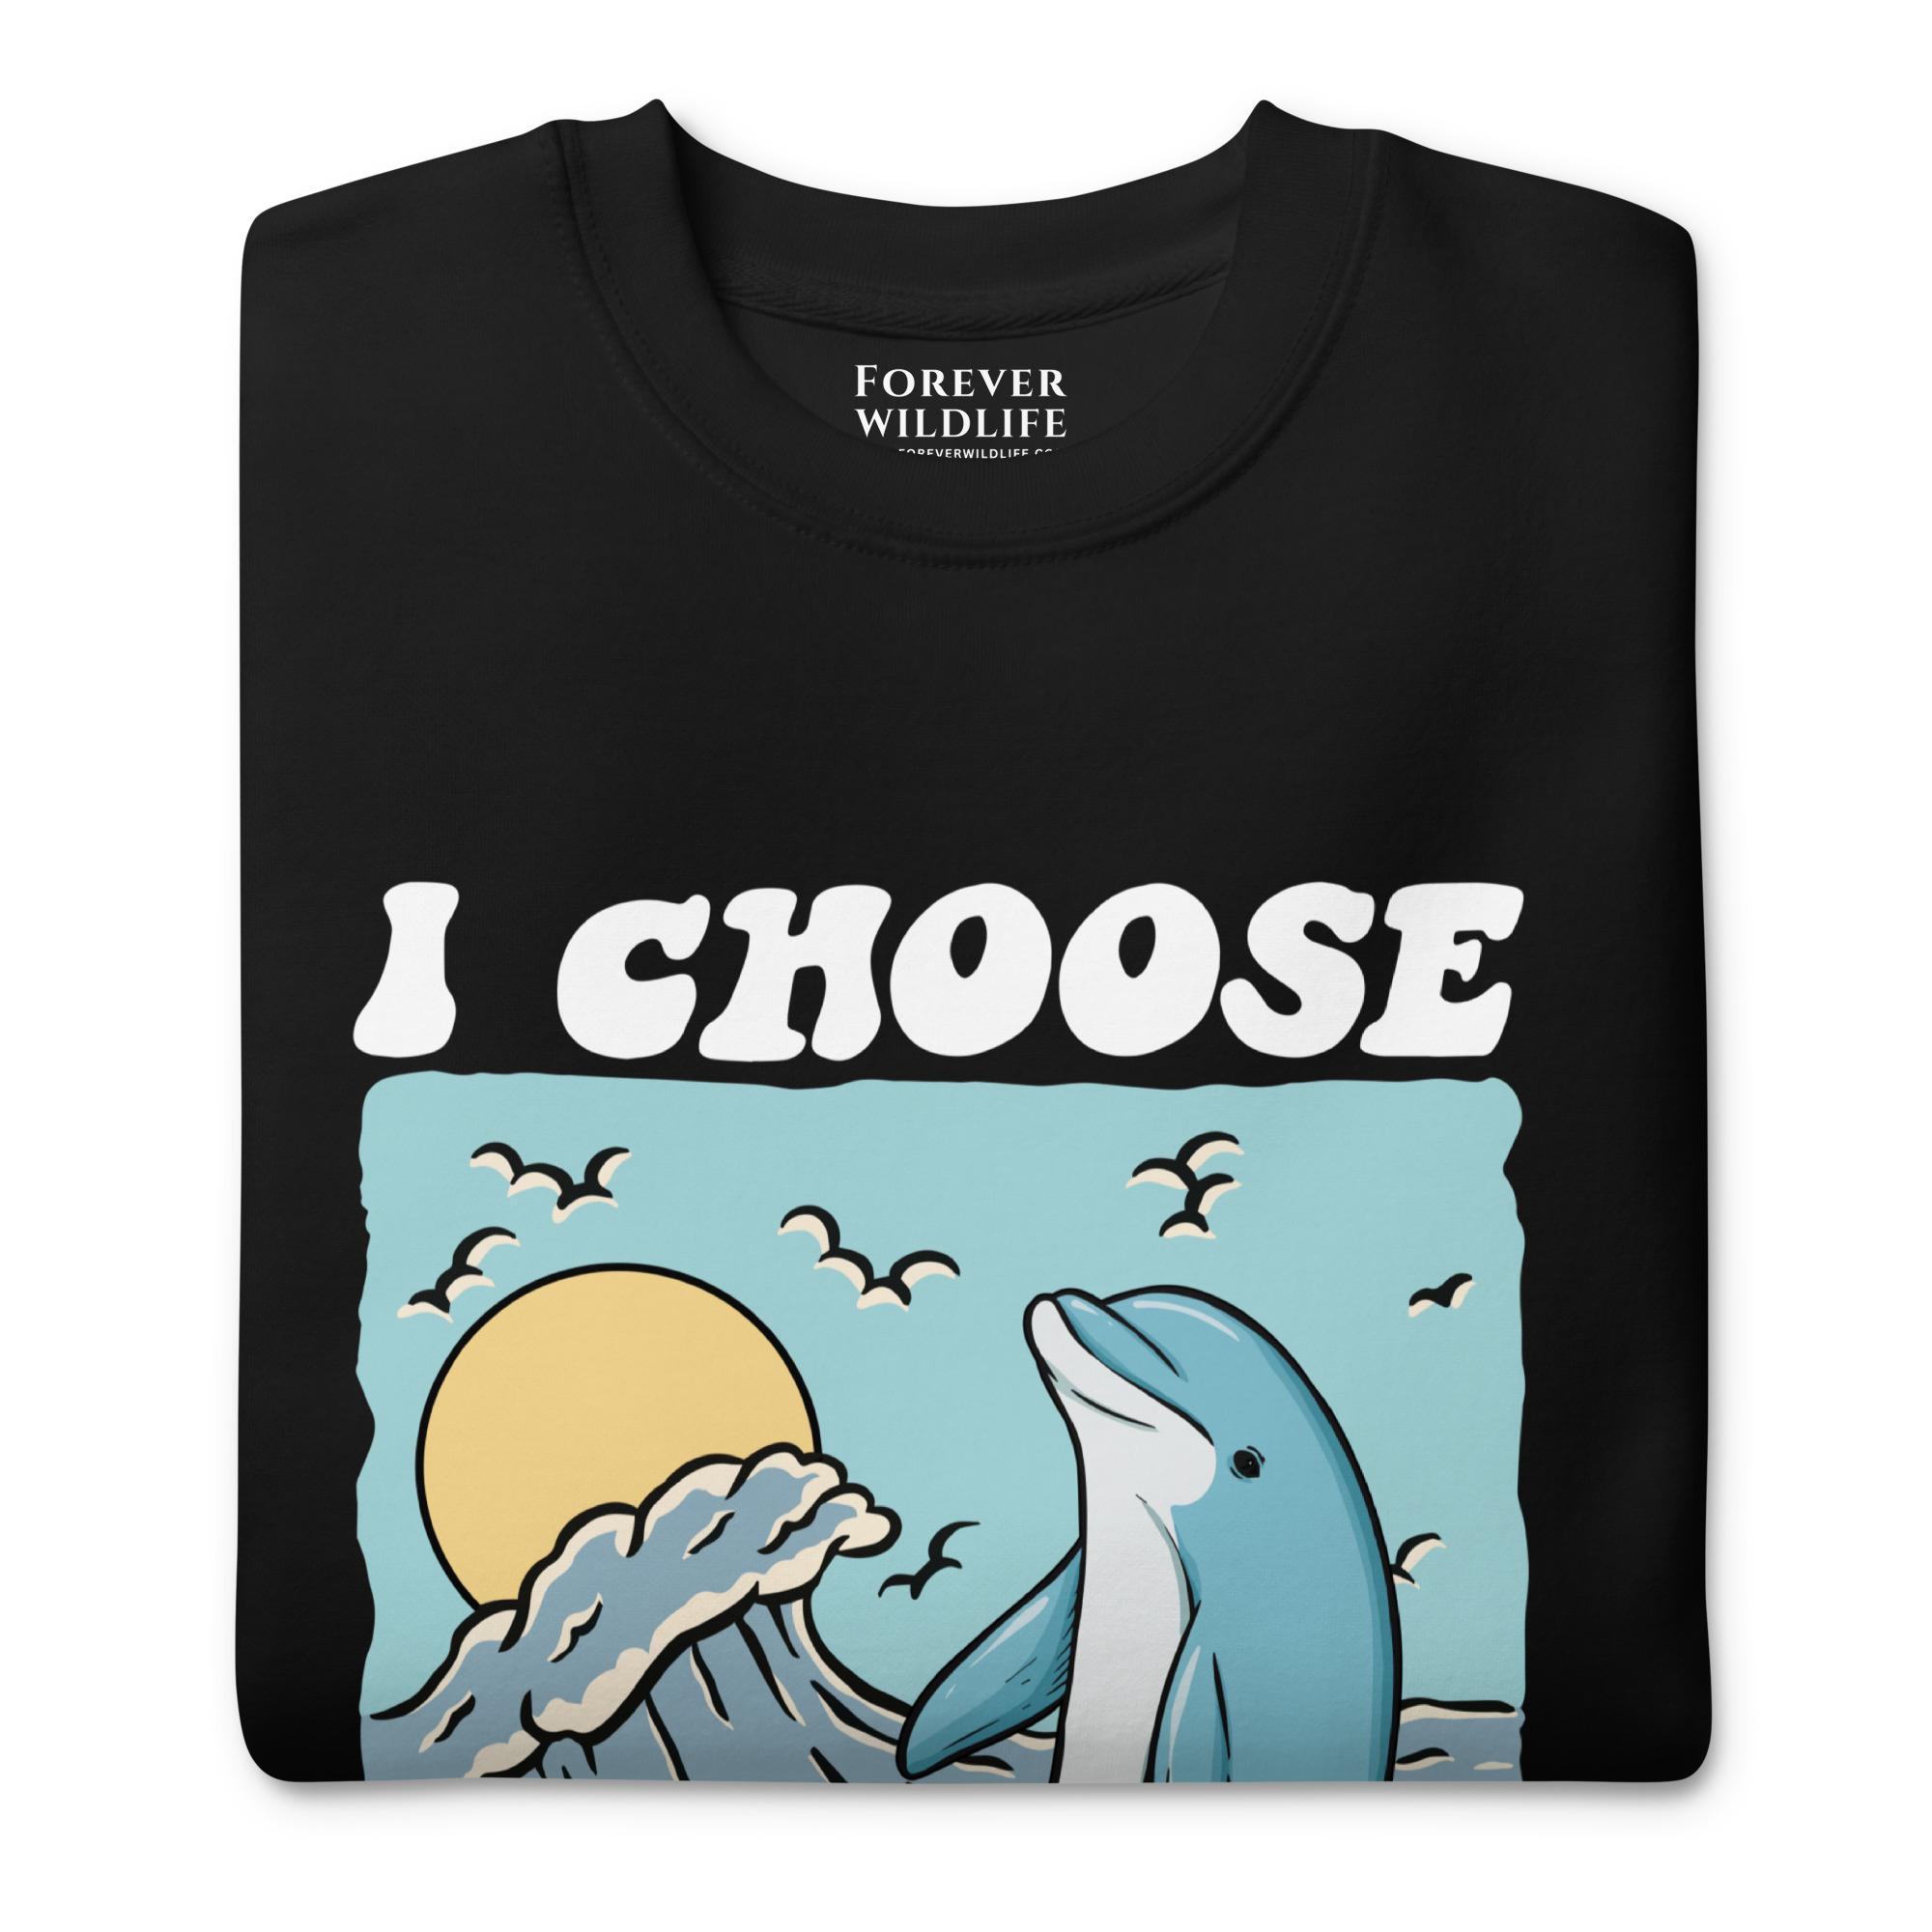 Dolphin Sweatshirt in Black-Premium Wildlife Animal Inspiration Sweatshirt Design with 'I Choose Happiness' text, part of Wildlife Sweatshirts & Clothing from Forever Wildlife.